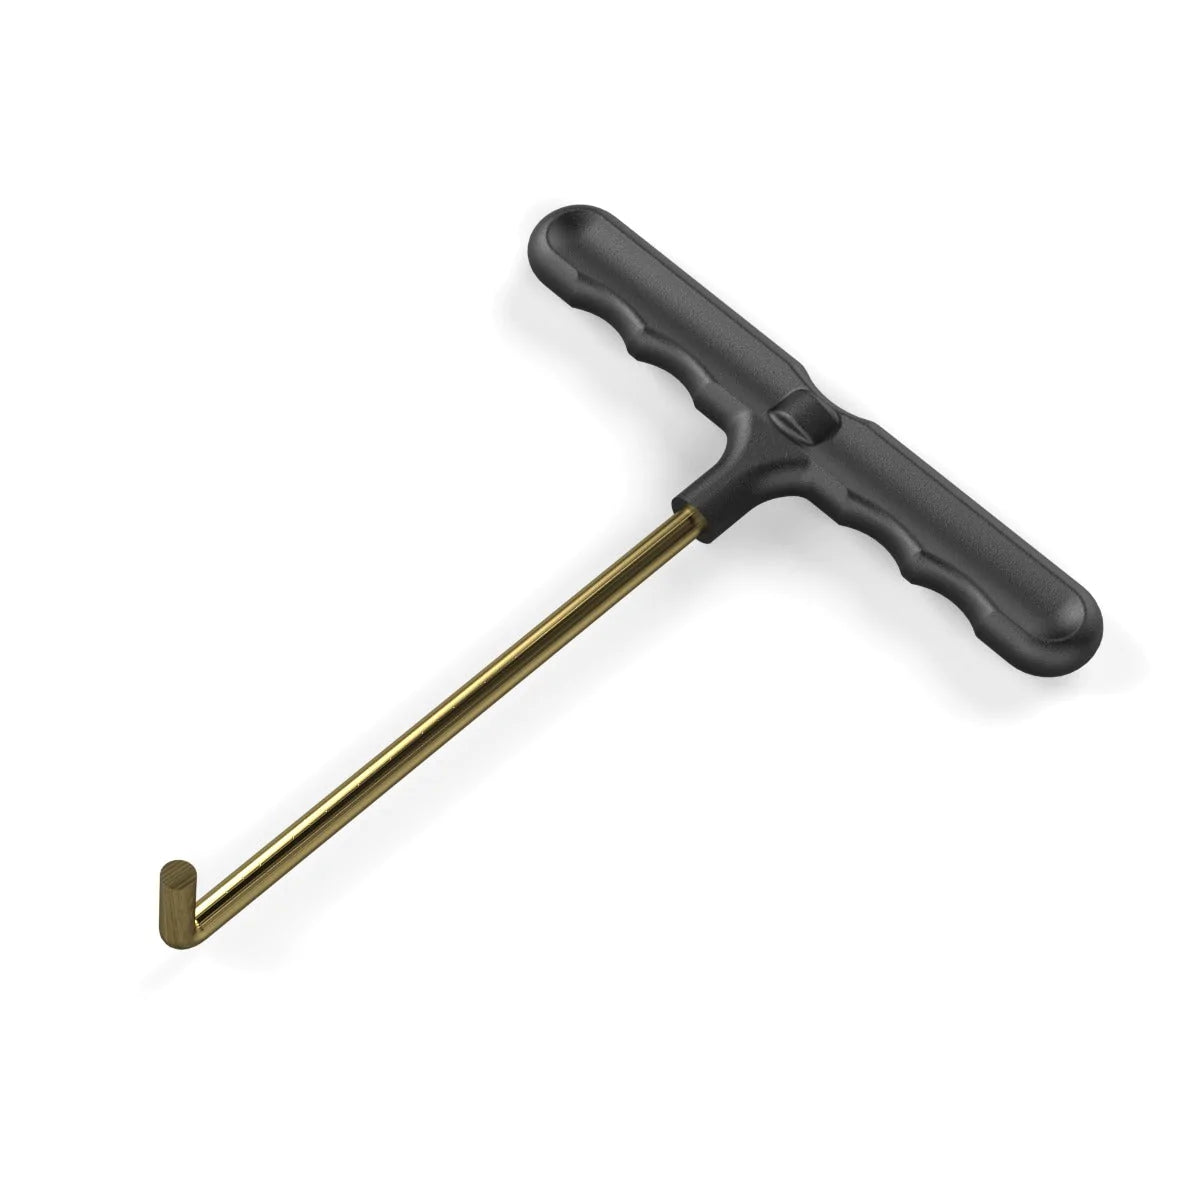 Trampoline spring pull tool